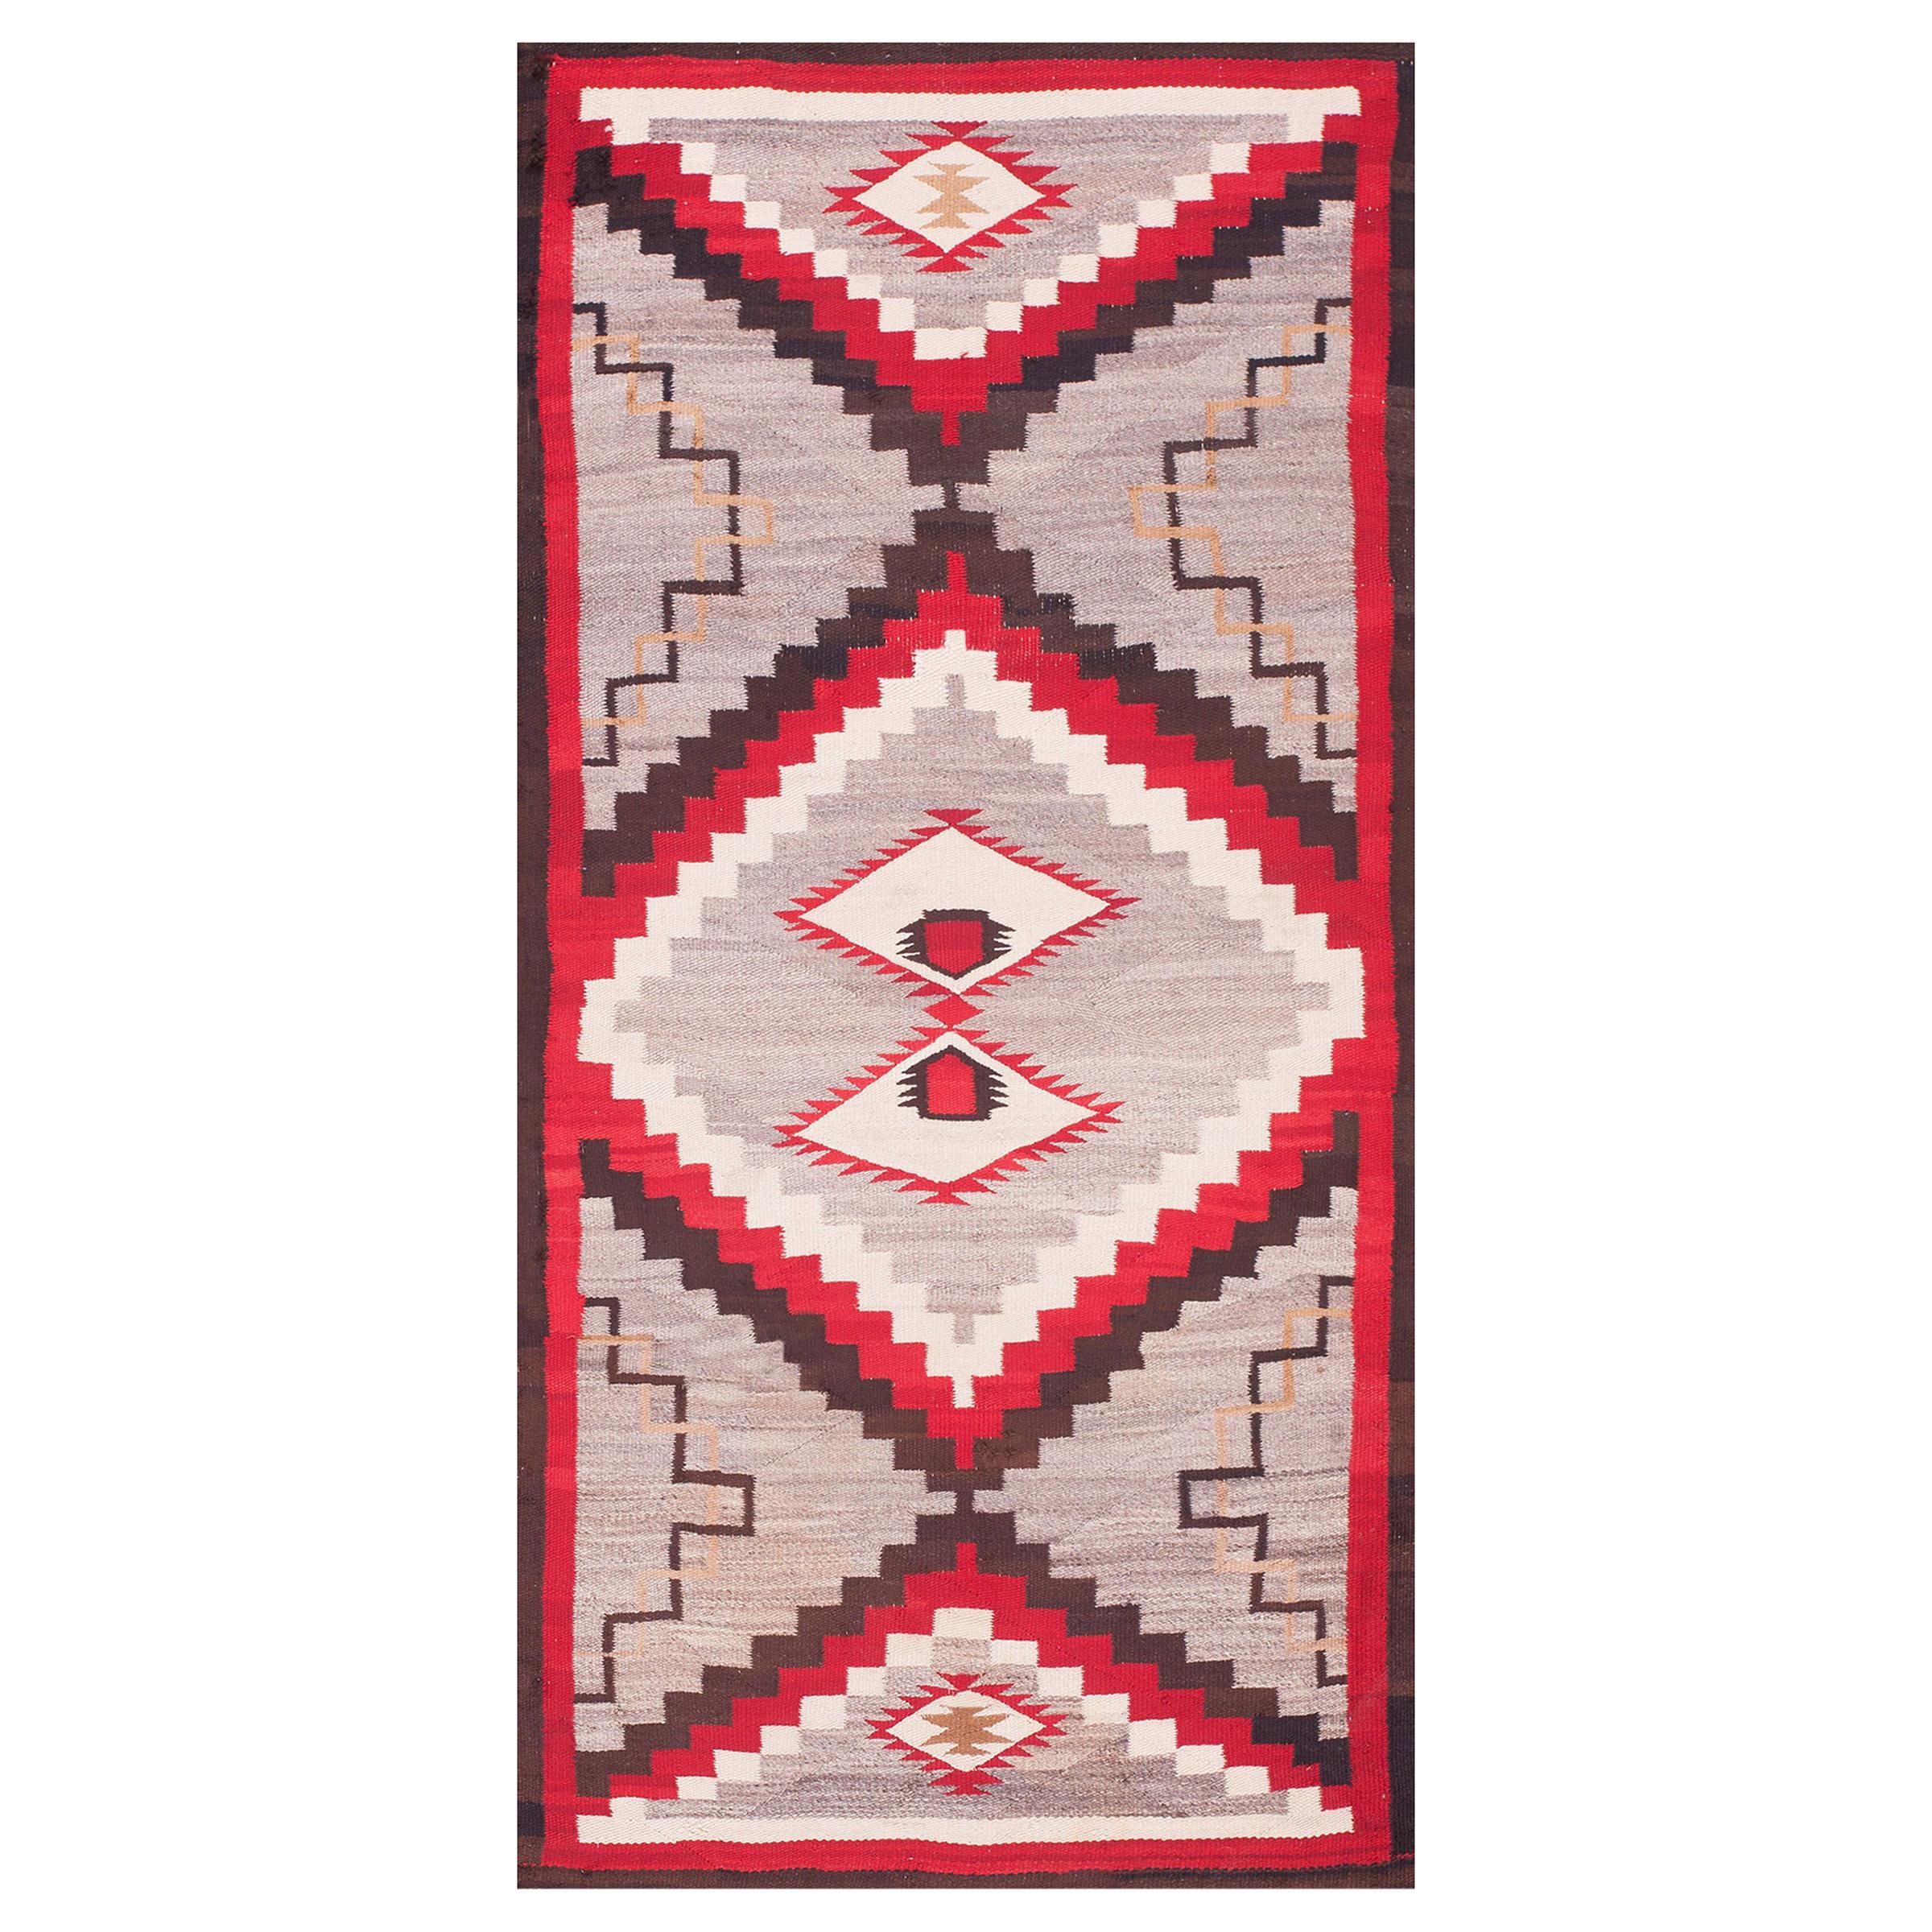 Early 20th Century American Navajo Carpet ( 3'10" x 7'4" - 117 x 224 )